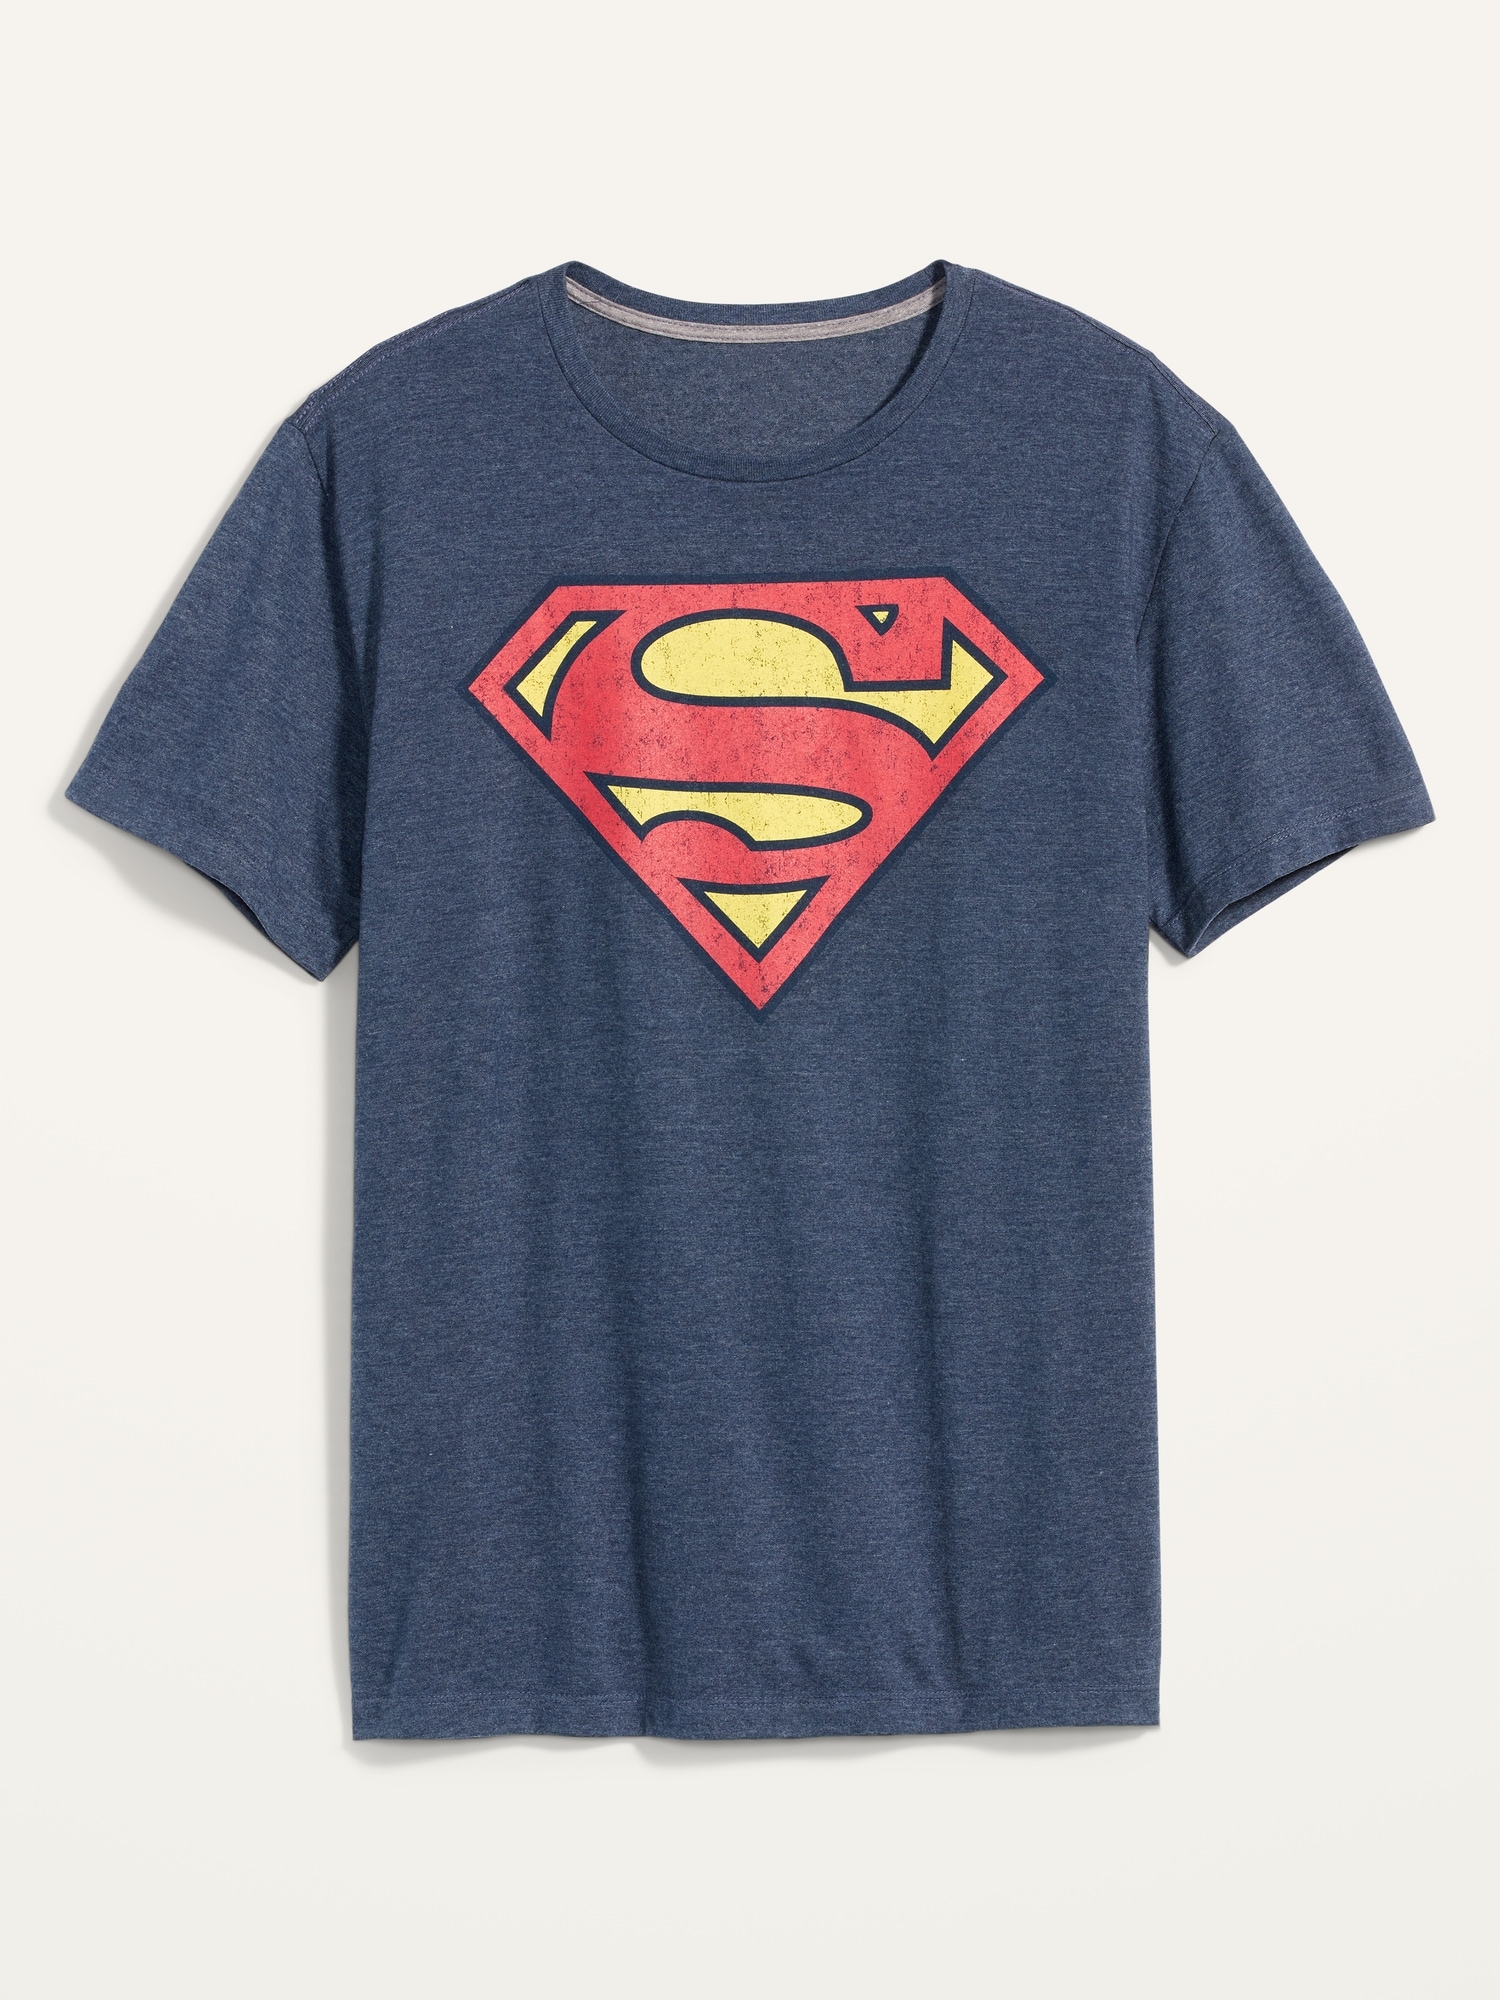 Spruit Ronde Je zal beter worden DC Comics™ Superman Gender-Neutral T-Shirt for Adults | Old Navy